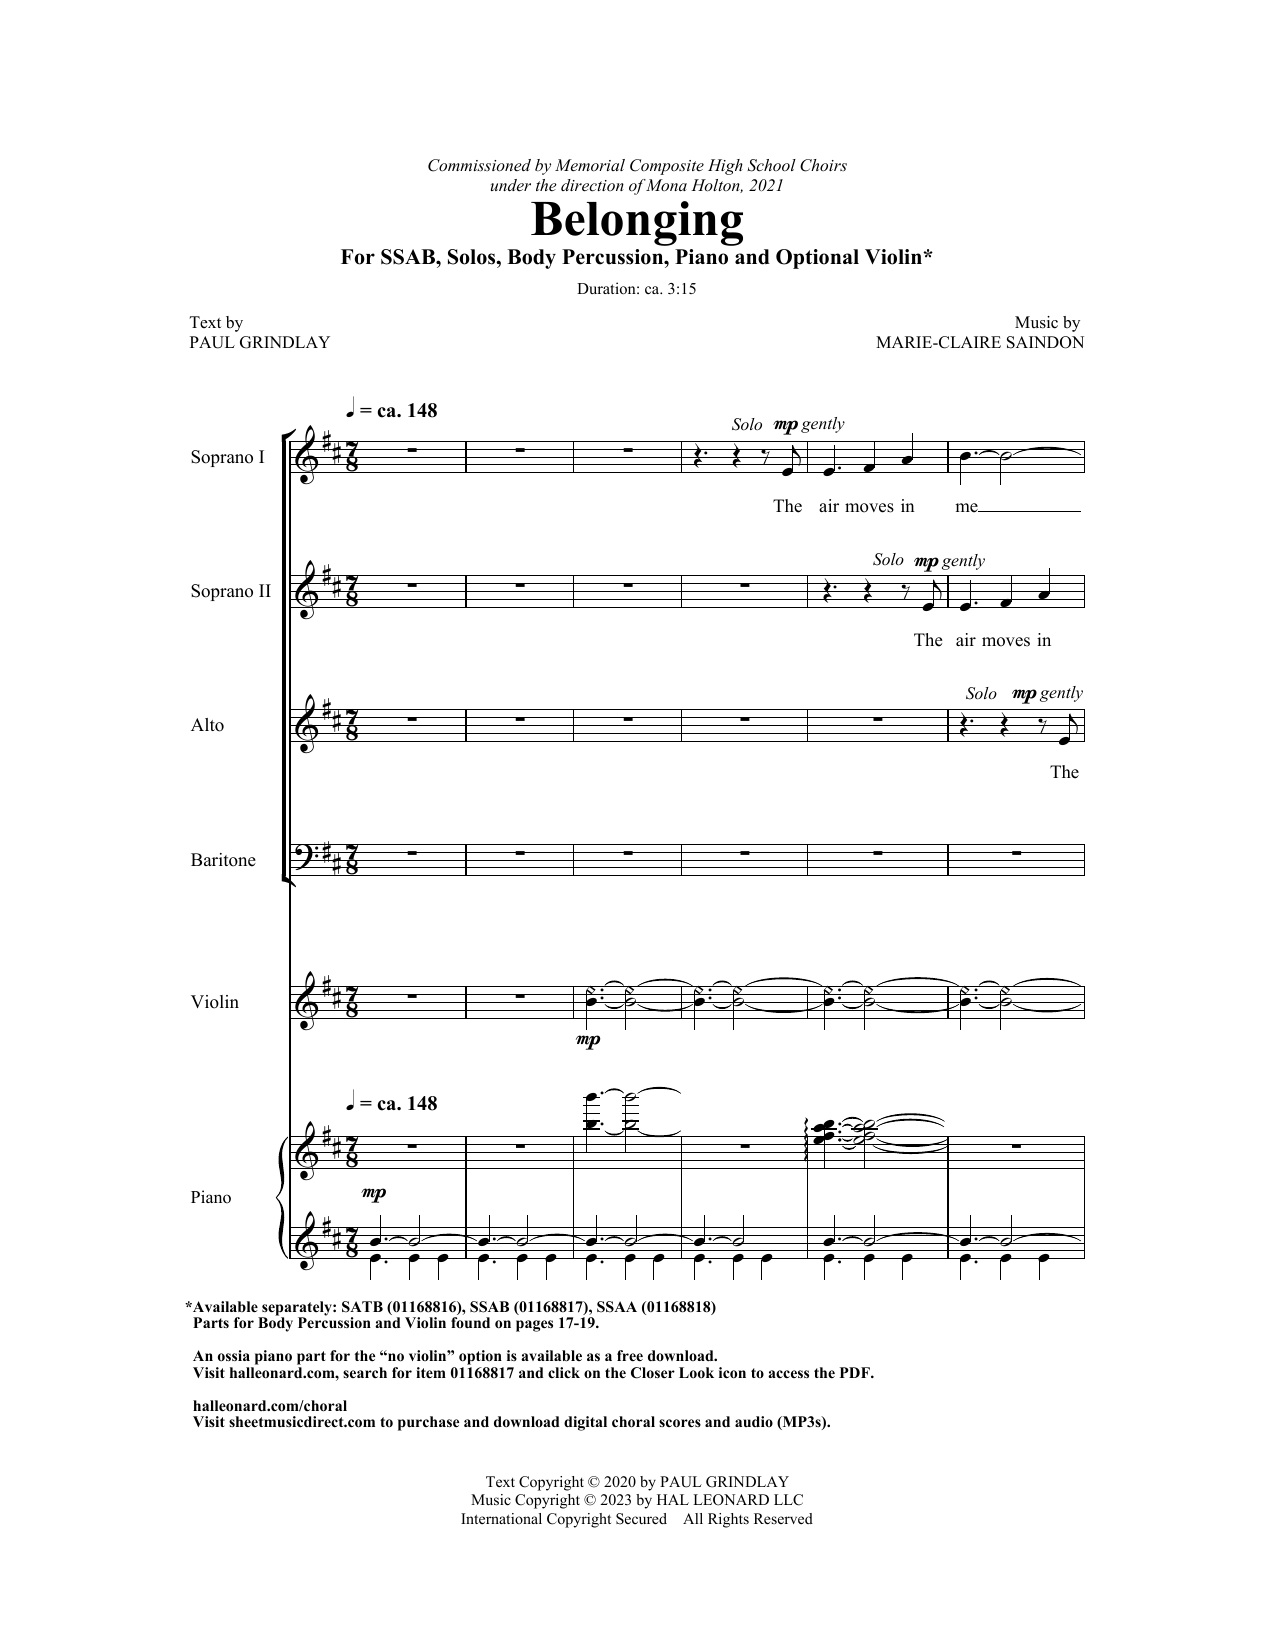 Marie-Clairé Saindon Belonging Sheet Music Notes & Chords for SATB Choir - Download or Print PDF